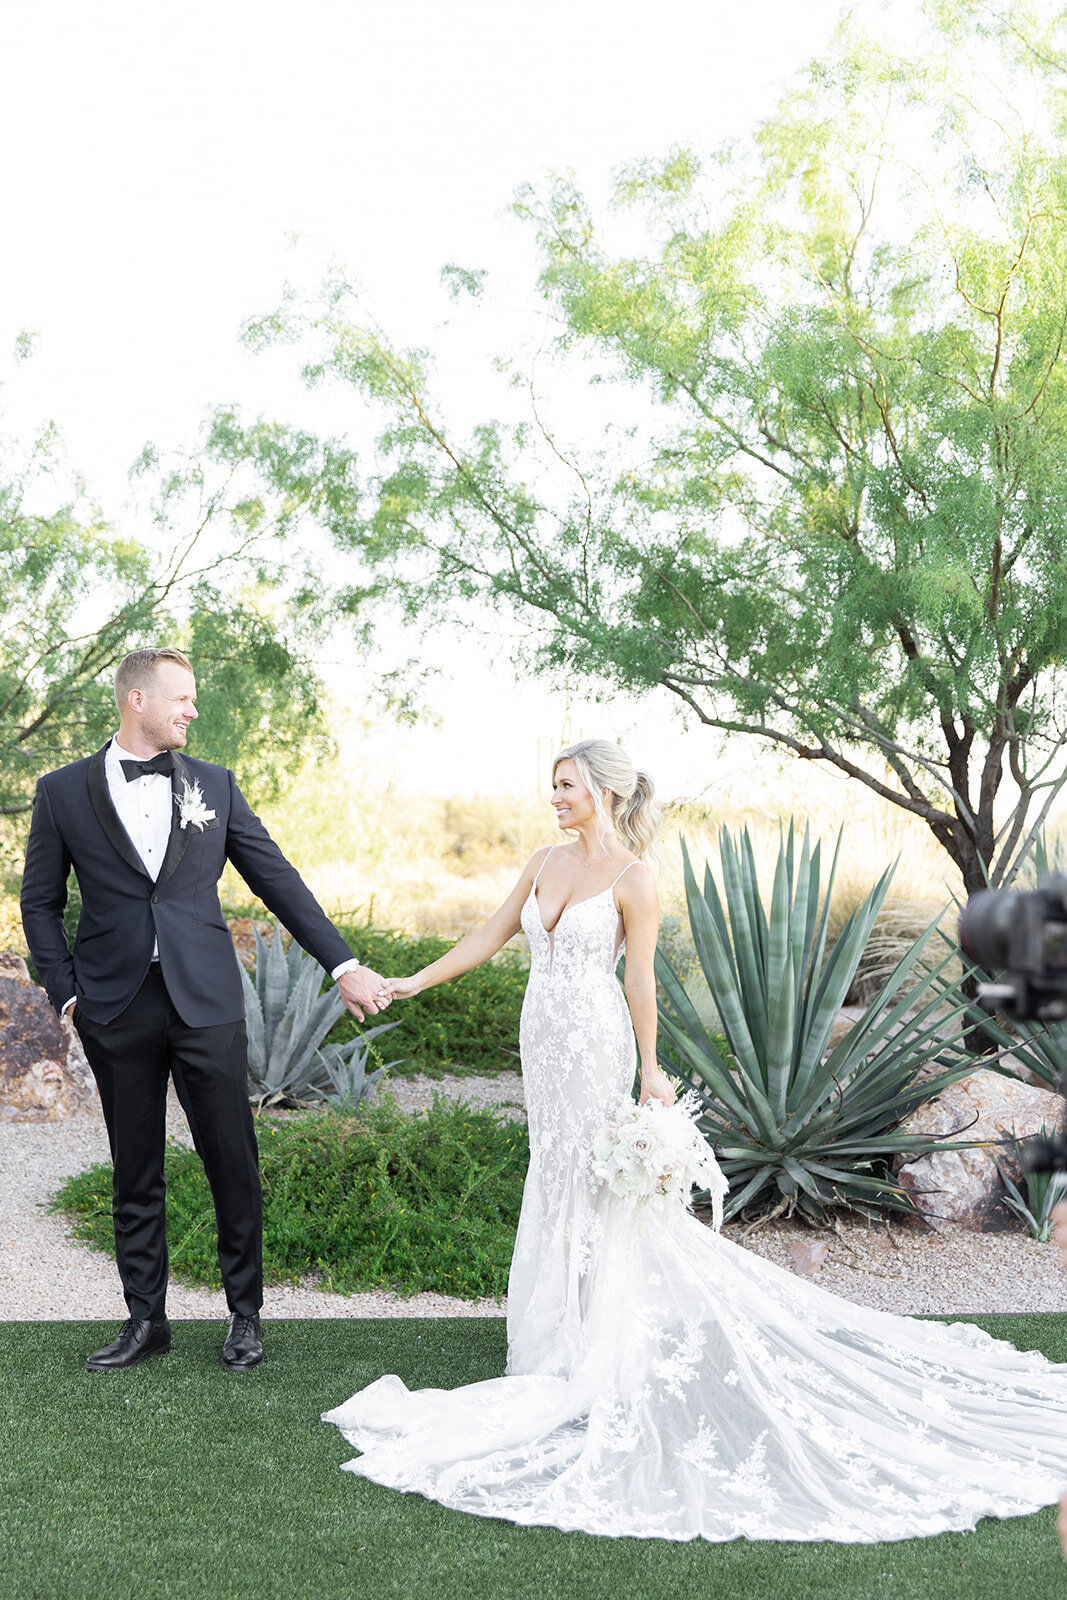 Karlie Colleen Photography - Ashley & Grant Wedding - The Paseo - Phoenix Arizona-711